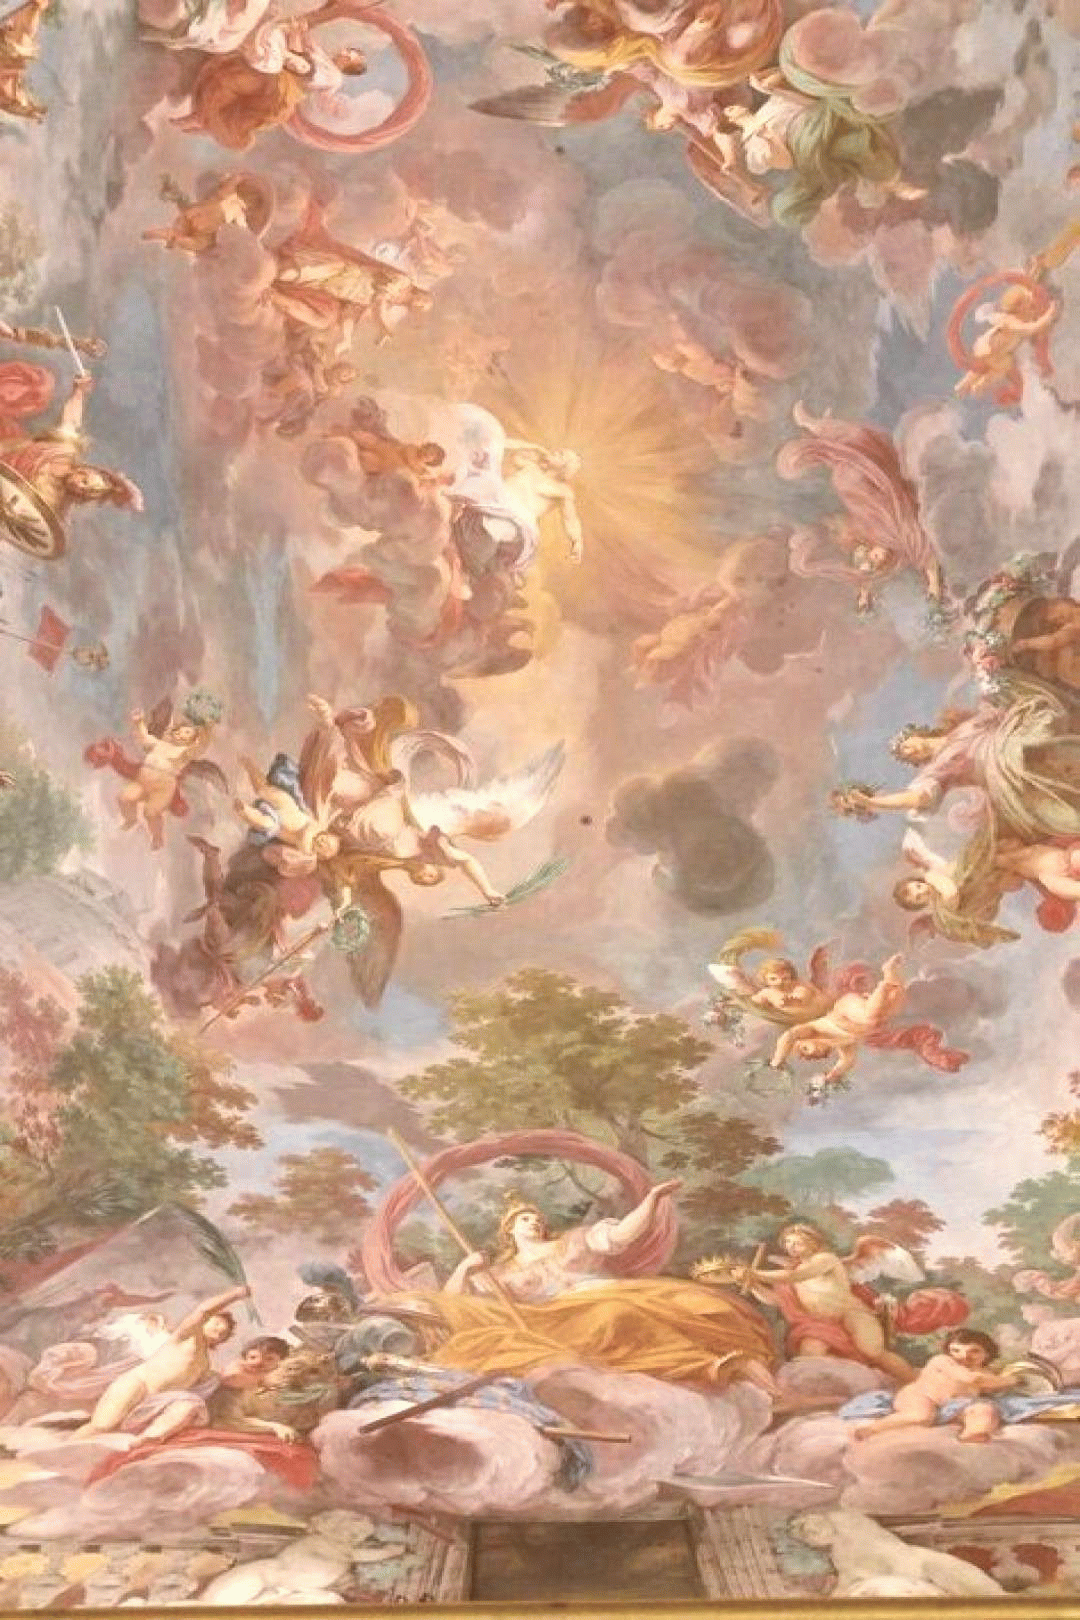 Aesthetic Renaissance Wallpapers - Top Free Aesthetic Renaissance